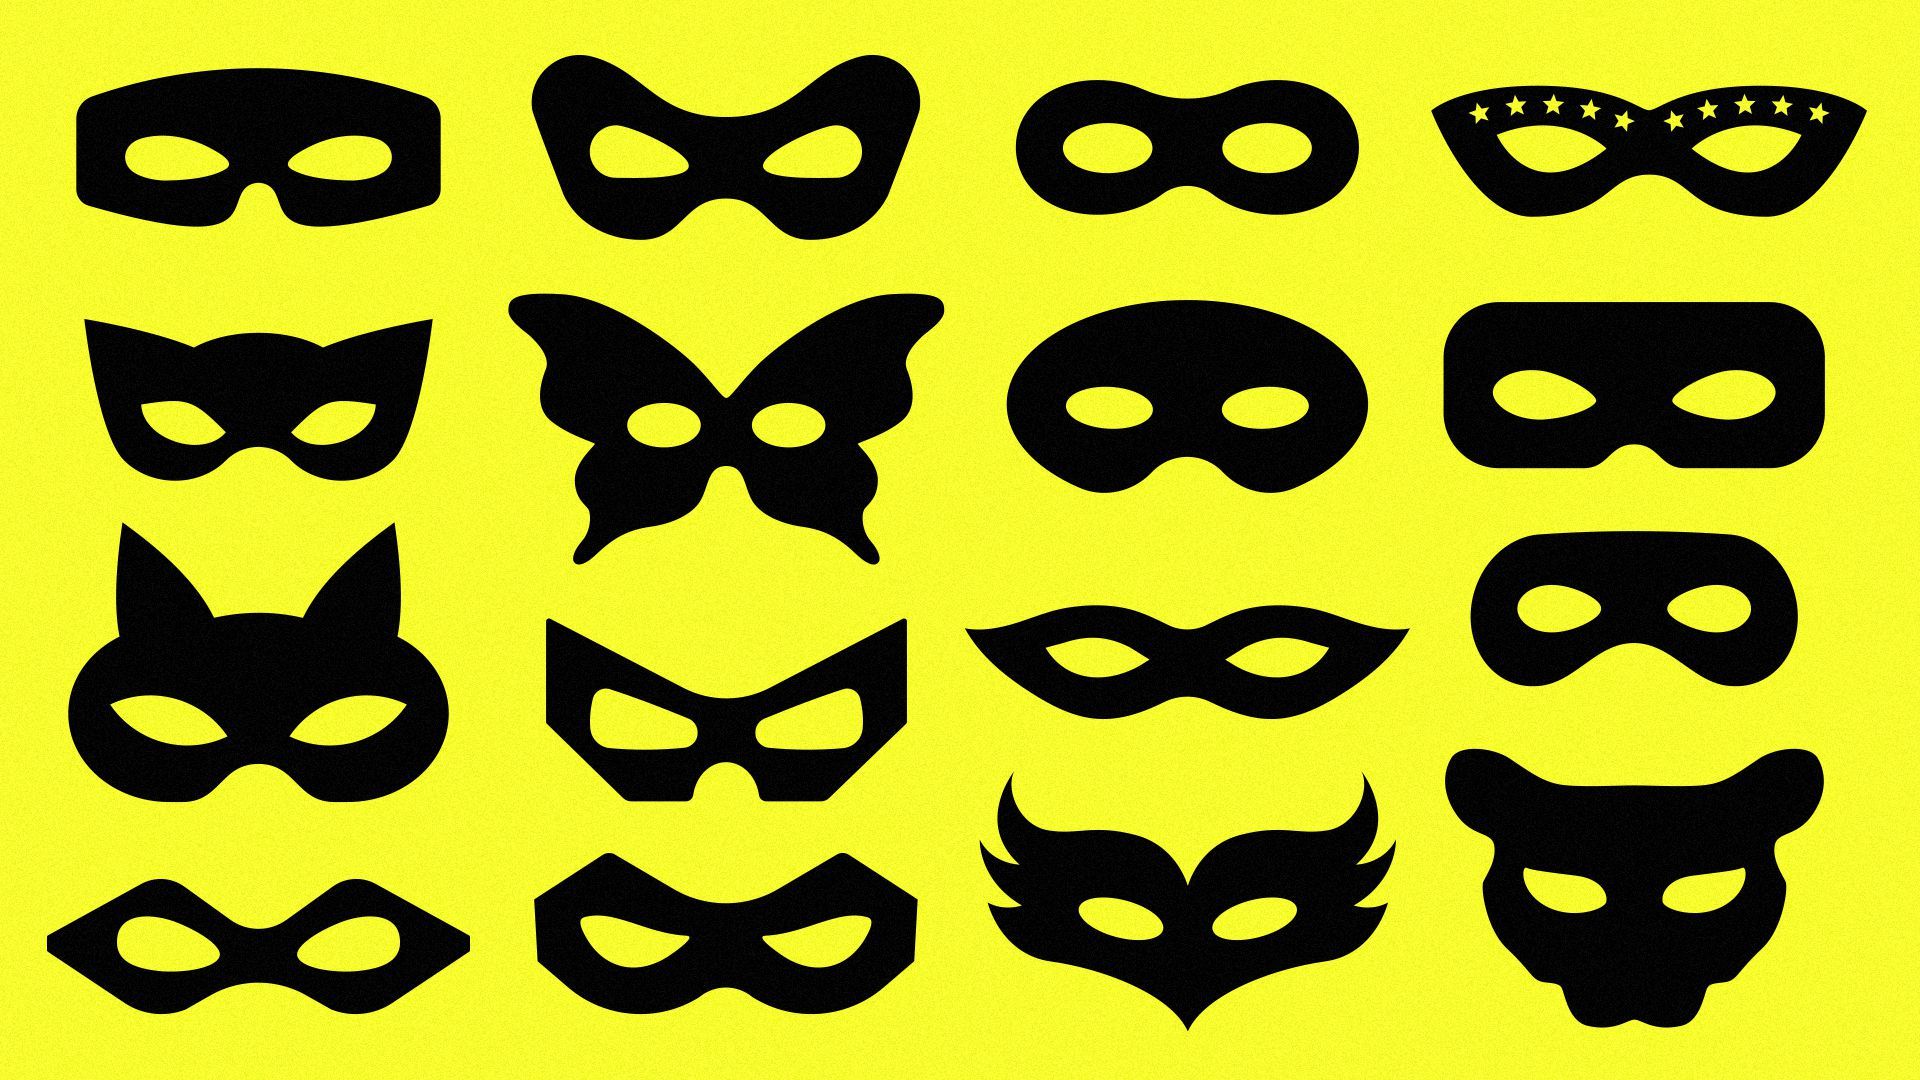 Illustration of various black superhero masks against a yellow background.